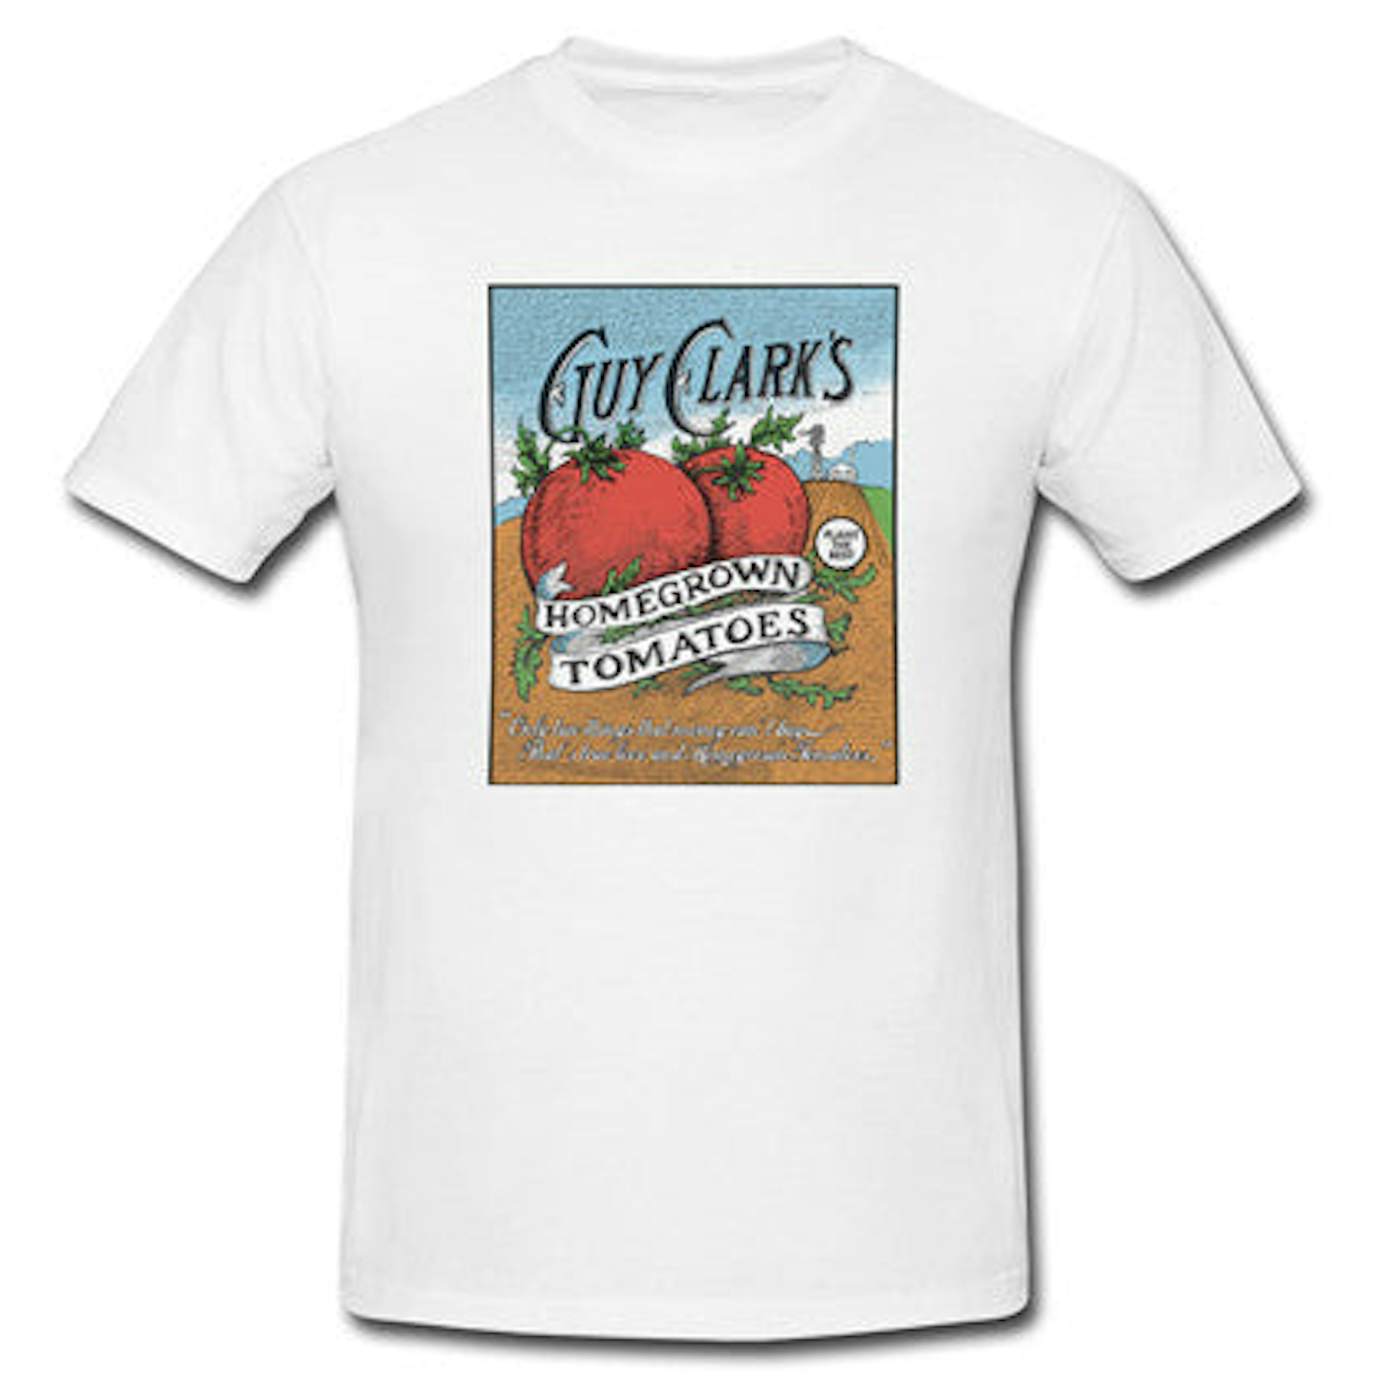 Guy Clark Homegrown Tomatoes (Shirt)